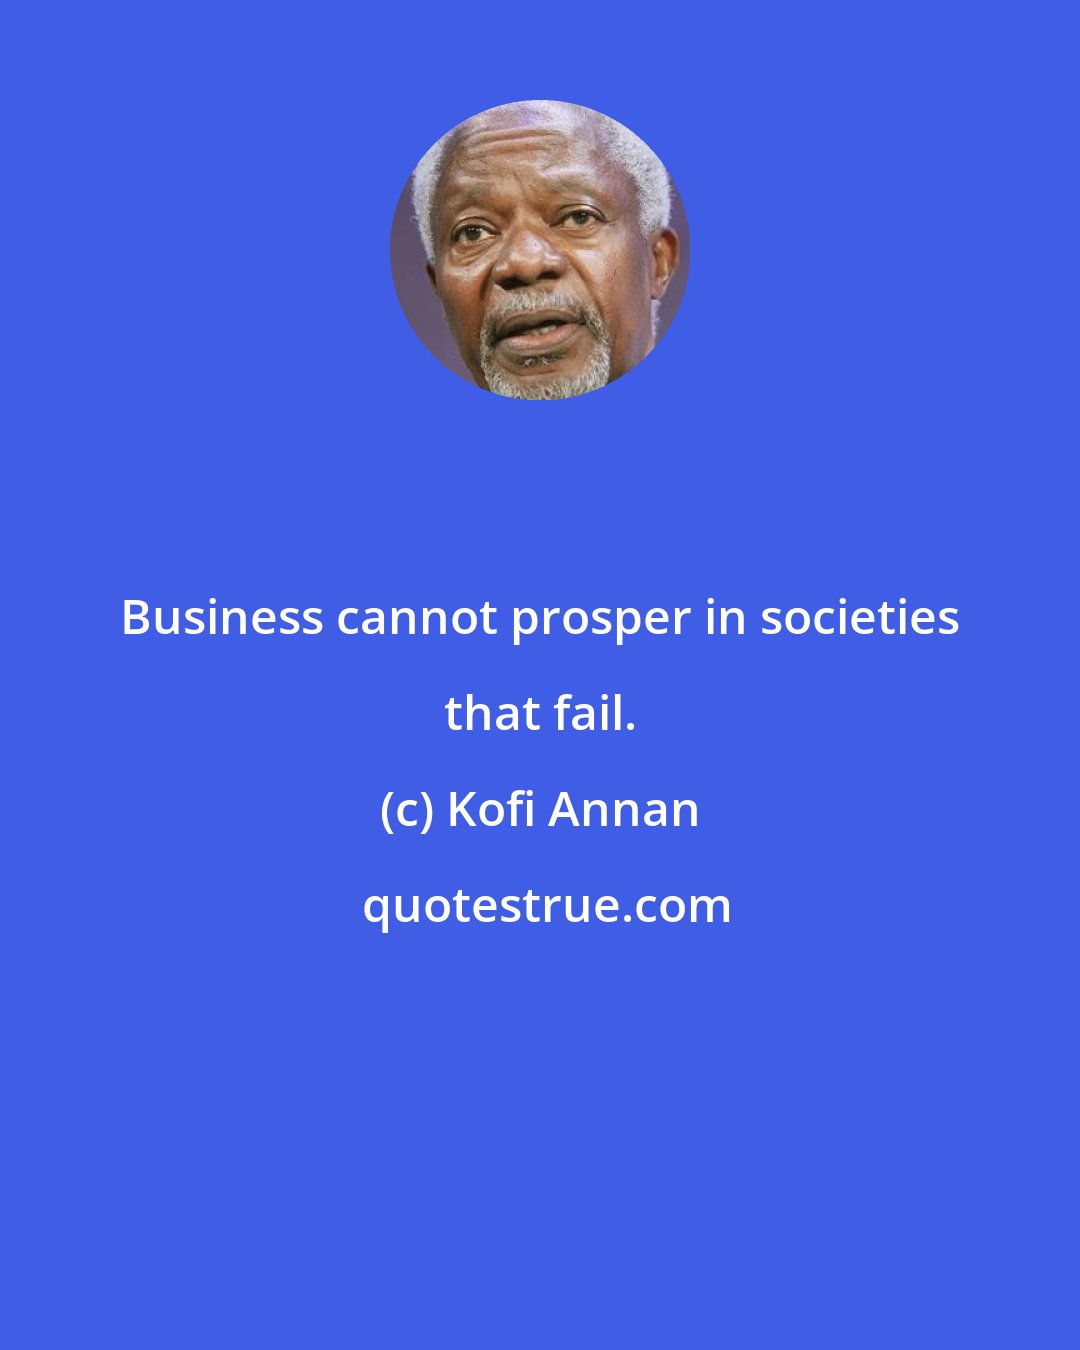 Kofi Annan: Business cannot prosper in societies that fail.